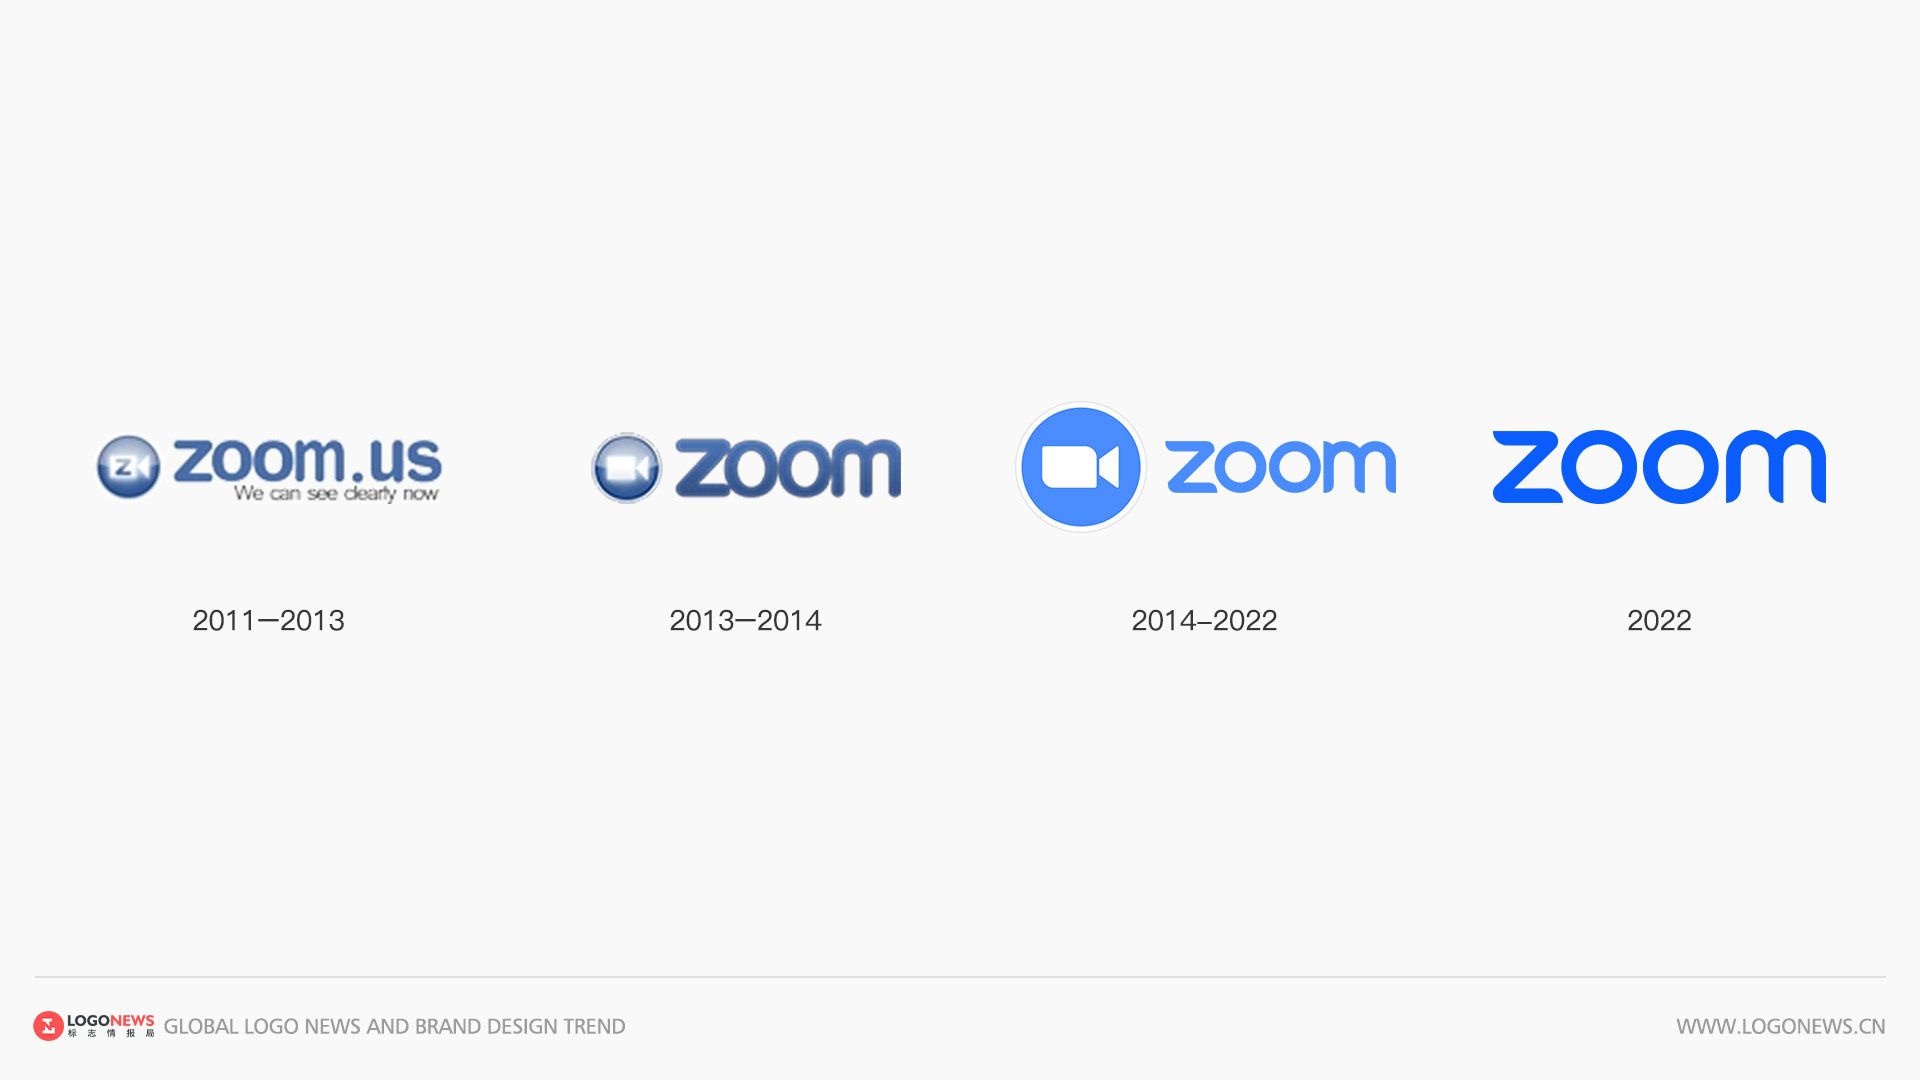 Zoom 更新品牌LOGO，將從視訊應用向大通訊平台轉型 5